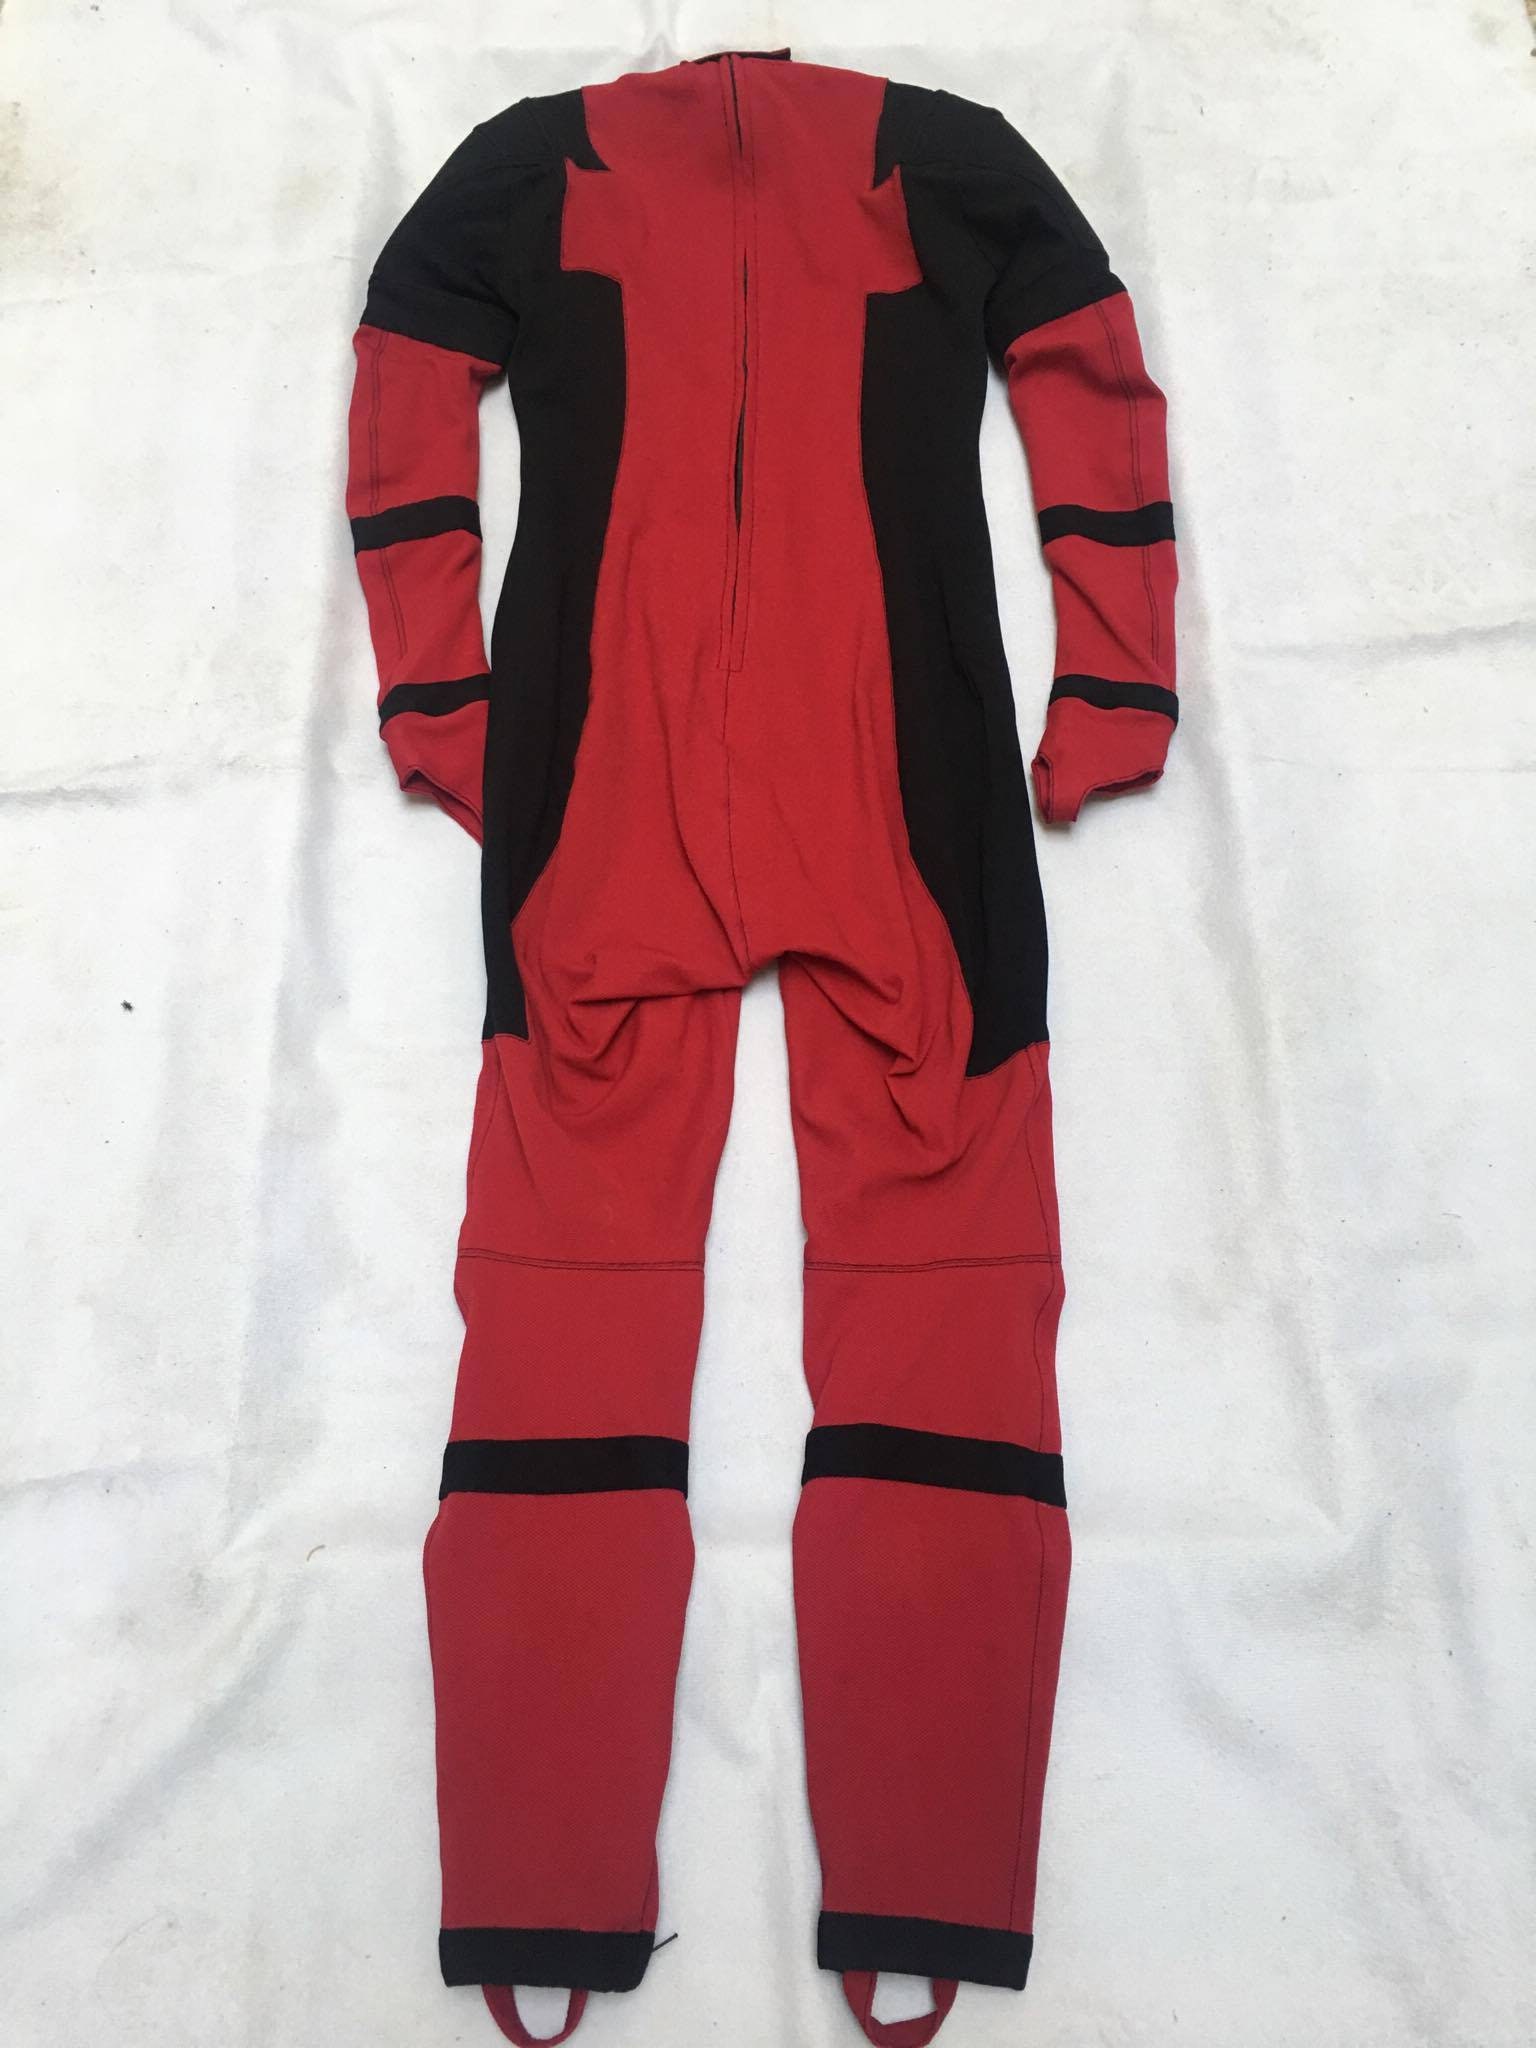 Lady Deadpool Cosplay / Costume Suit replica : New Design | Etsy